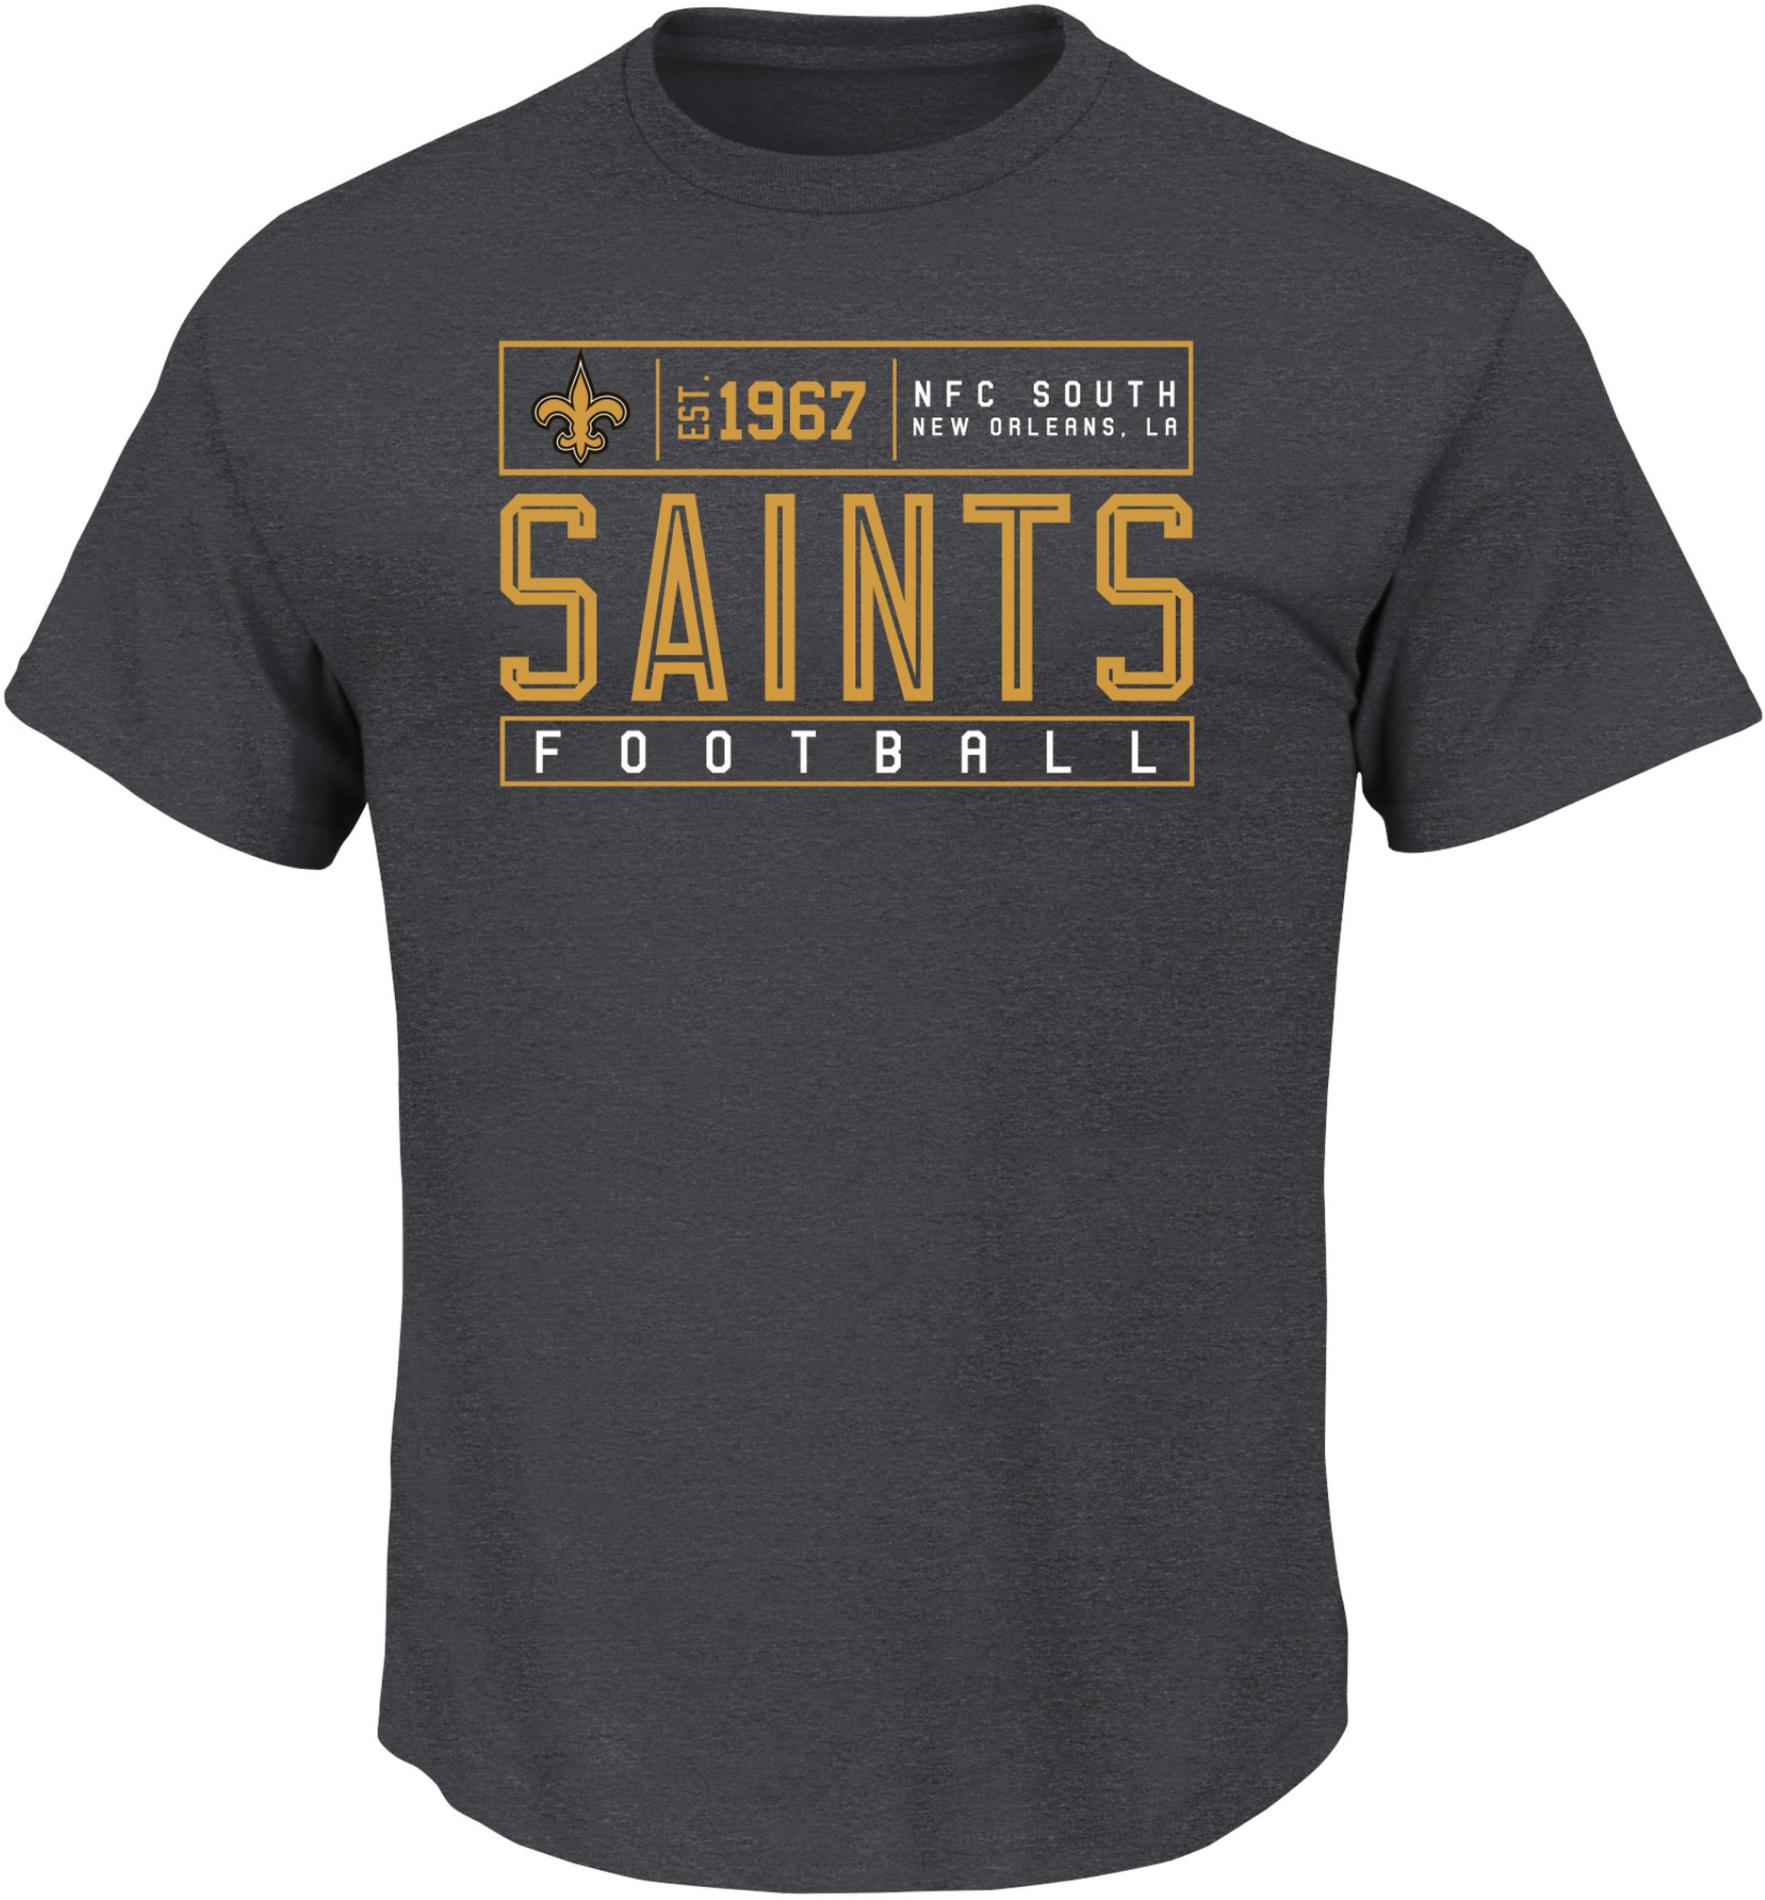 NFL Men's Short-Sleeve T-Shirt - New Orleans Saints